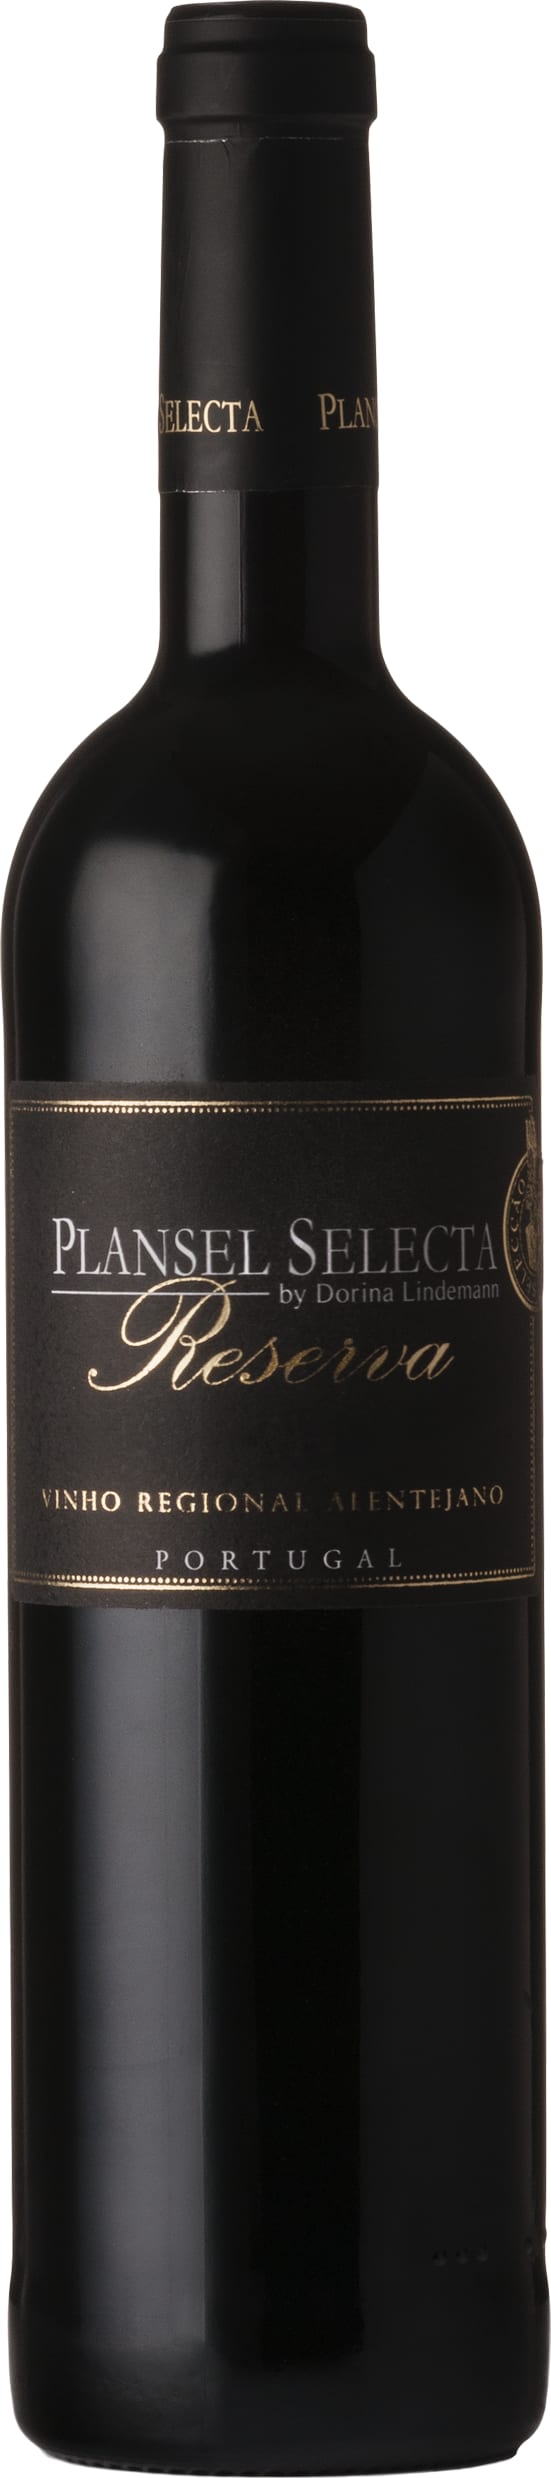 Quinta da Plansel Selecta Reserva 2021 75cl - Buy Quinta da Plansel Wines from GREAT WINES DIRECT wine shop